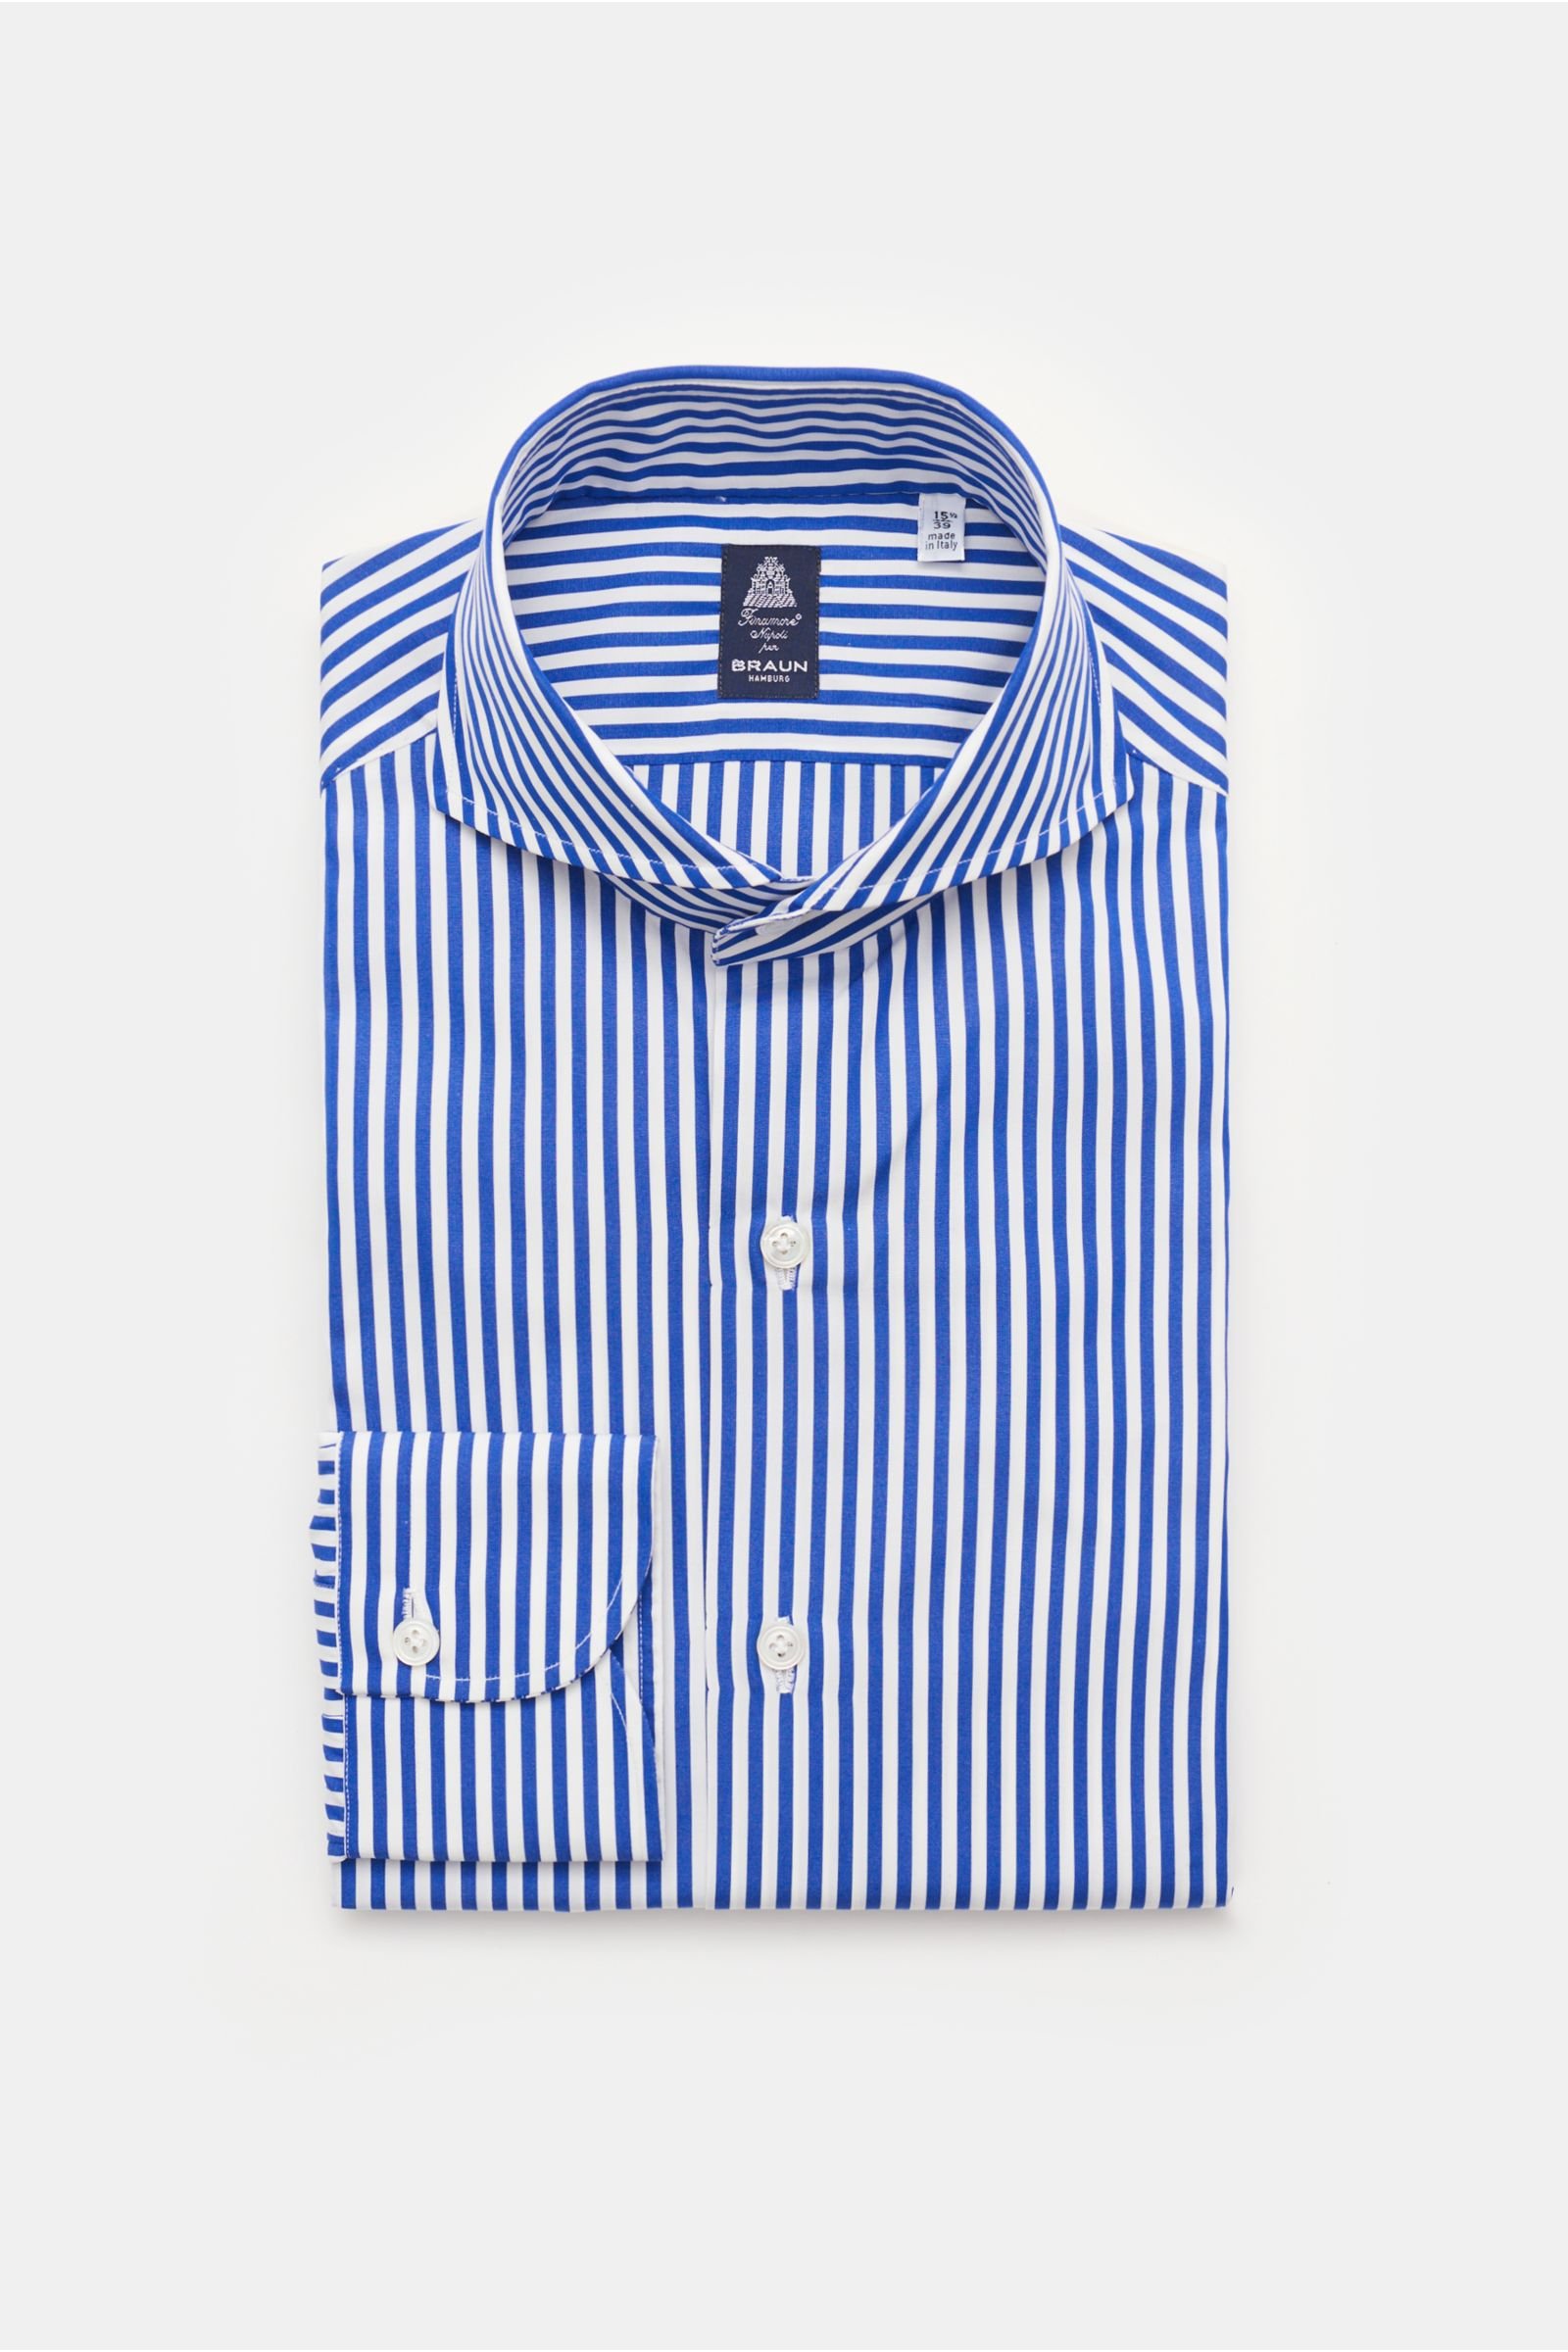 Business shirt 'Sergio Napoli' shark collar navy/white striped